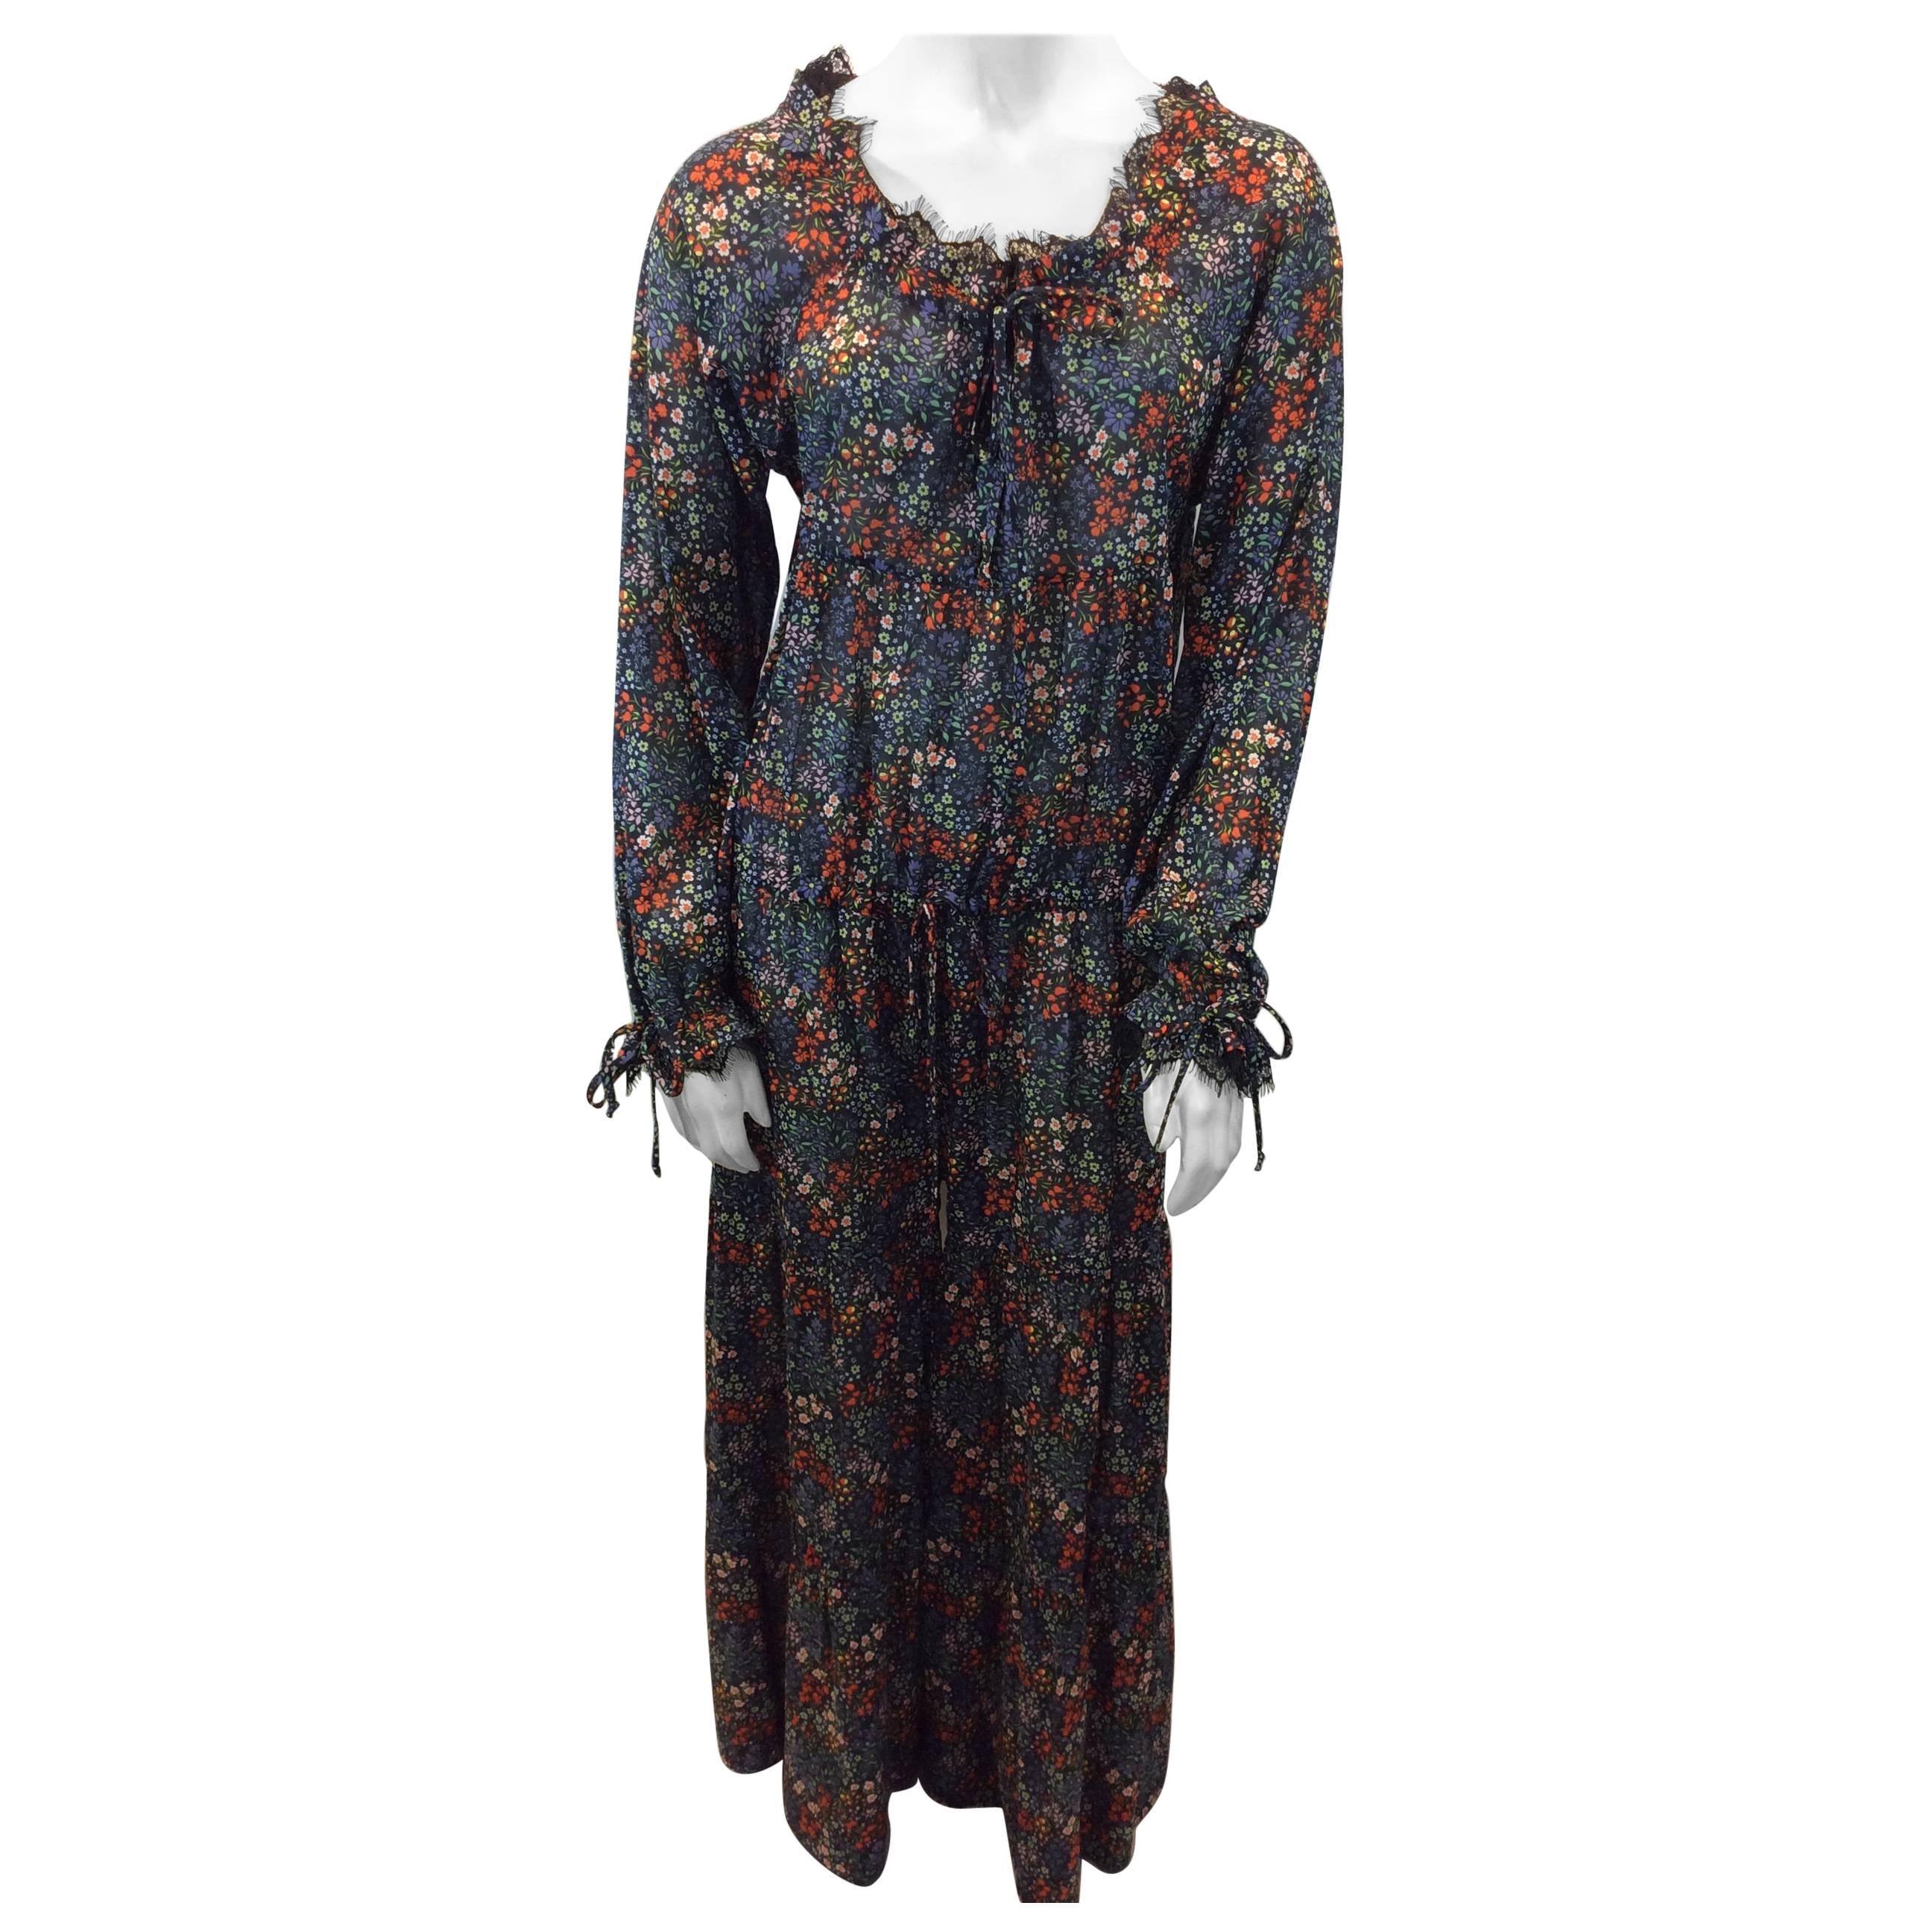 Warm Floral Cotton Jumpsuit With Lace Detail NWT For Sale